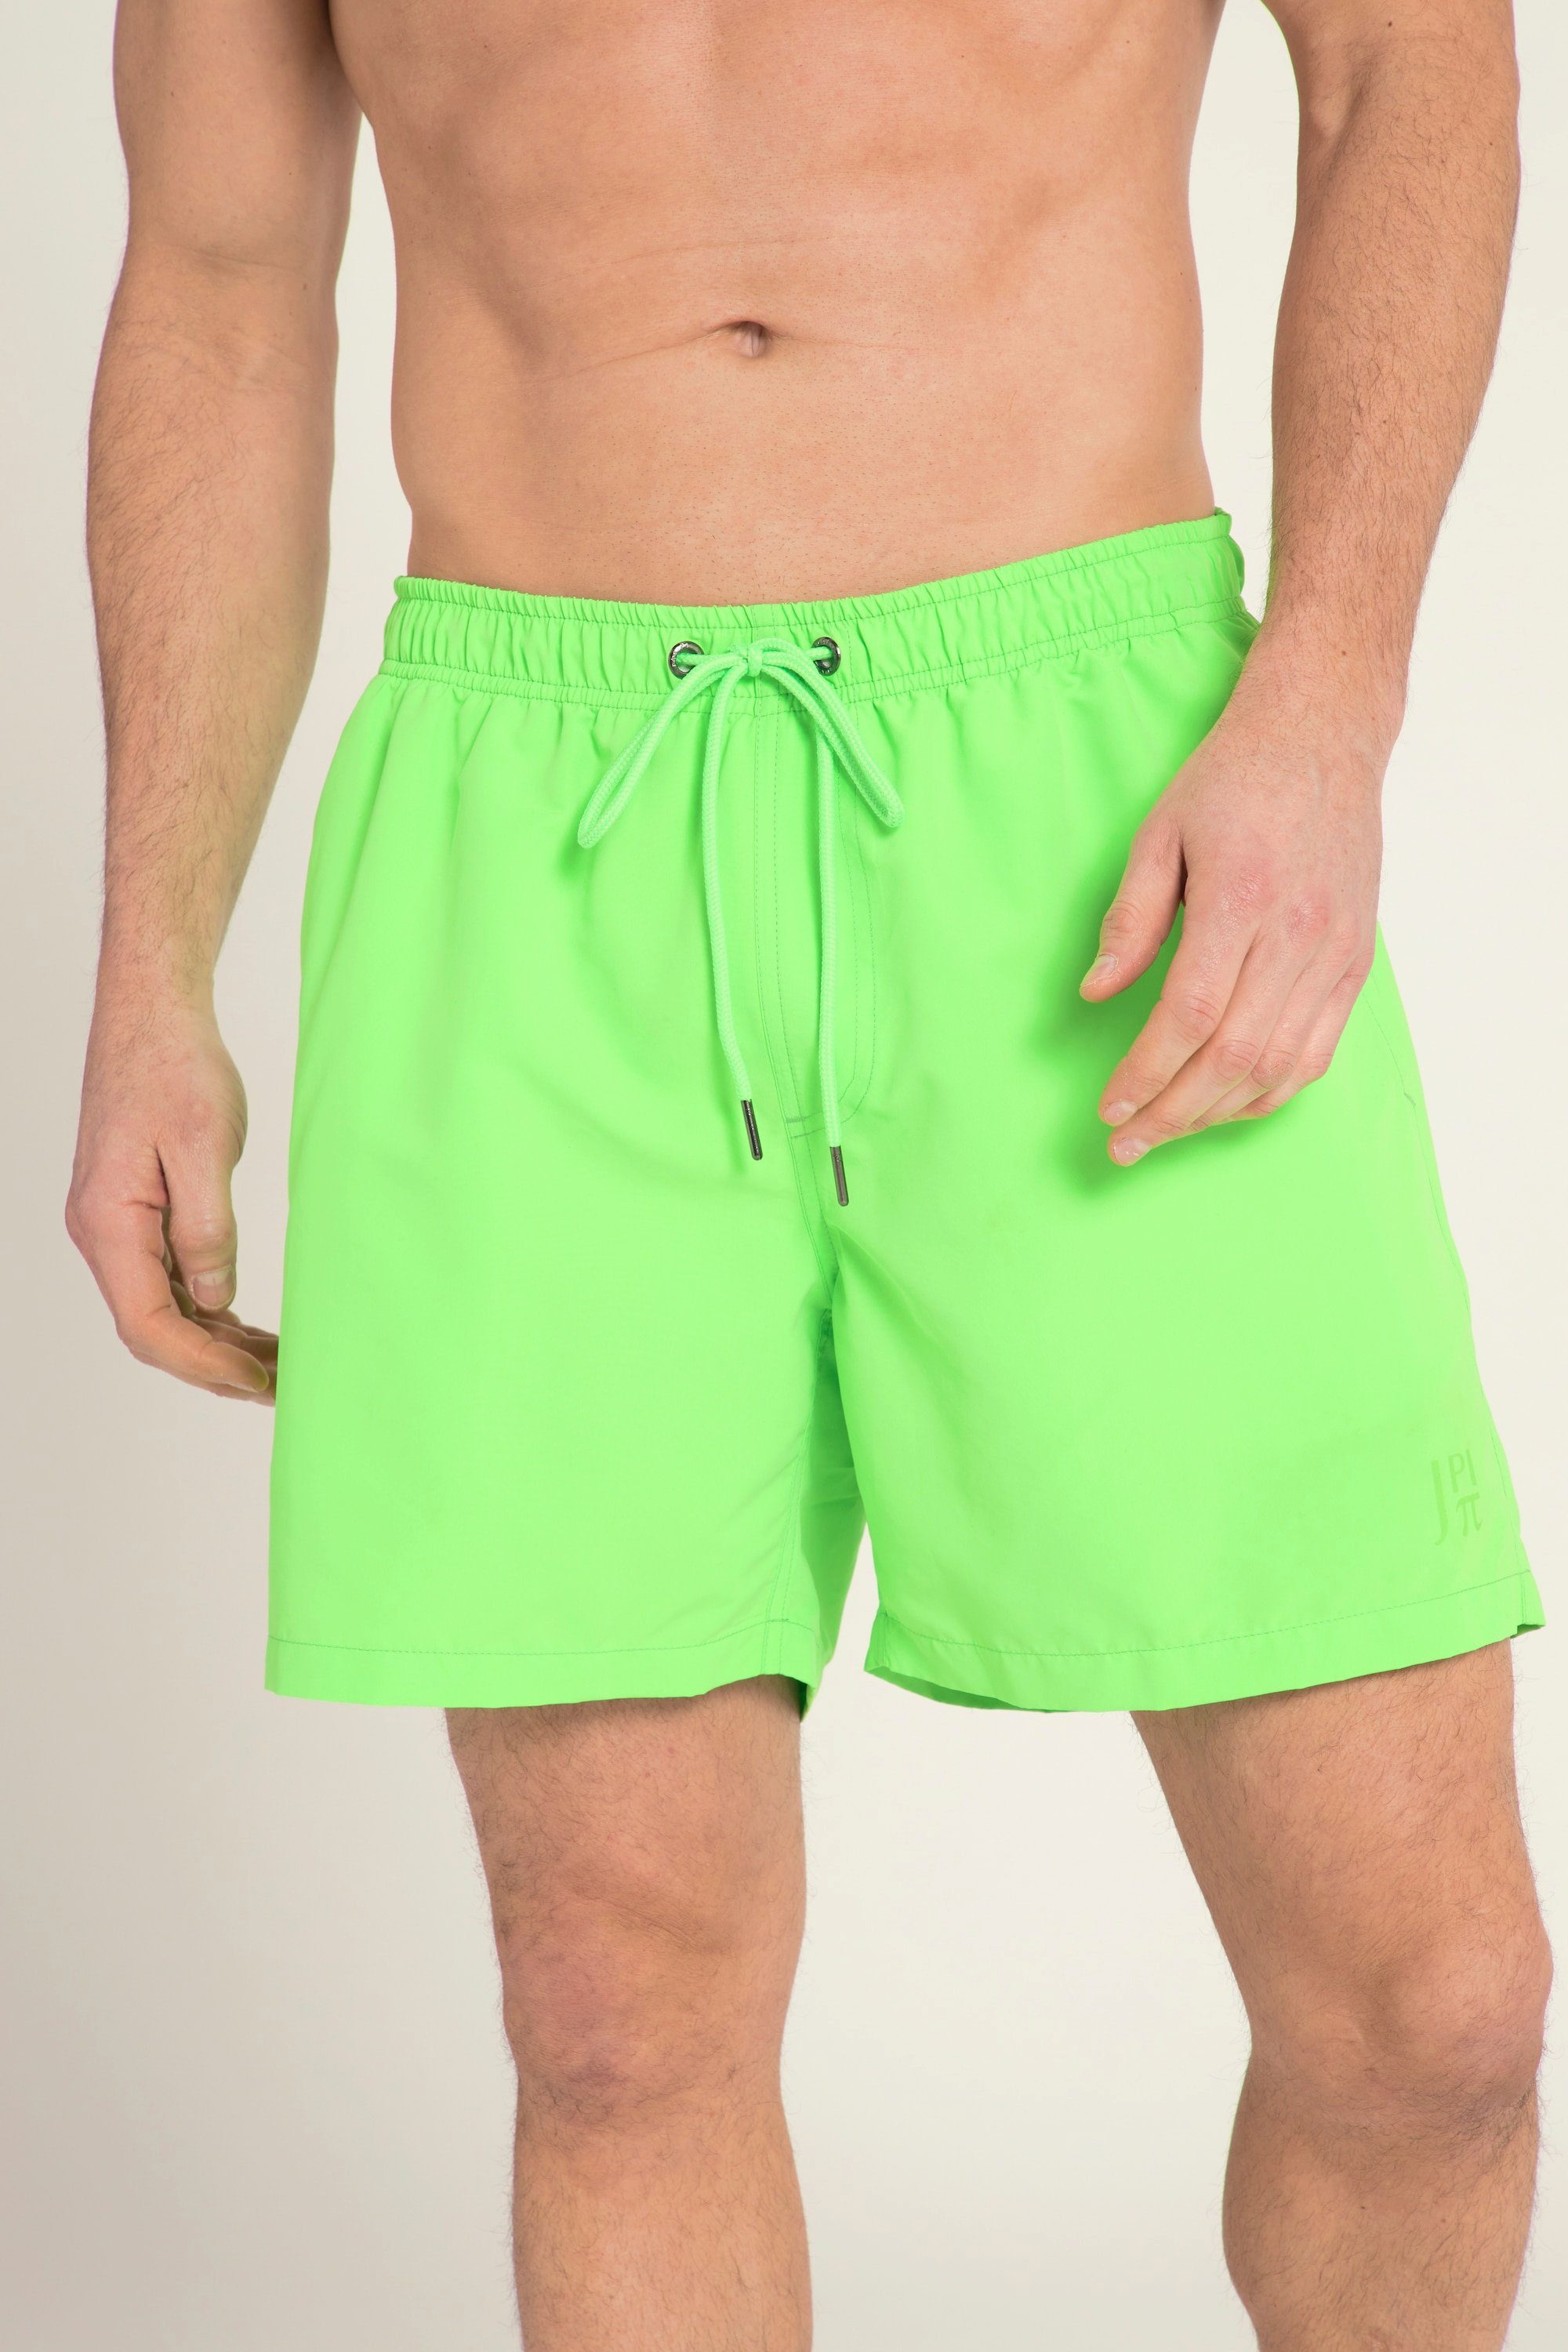 Zipptasche JP1880 grün Elastikbund Beachwear Badehose Badeshorts